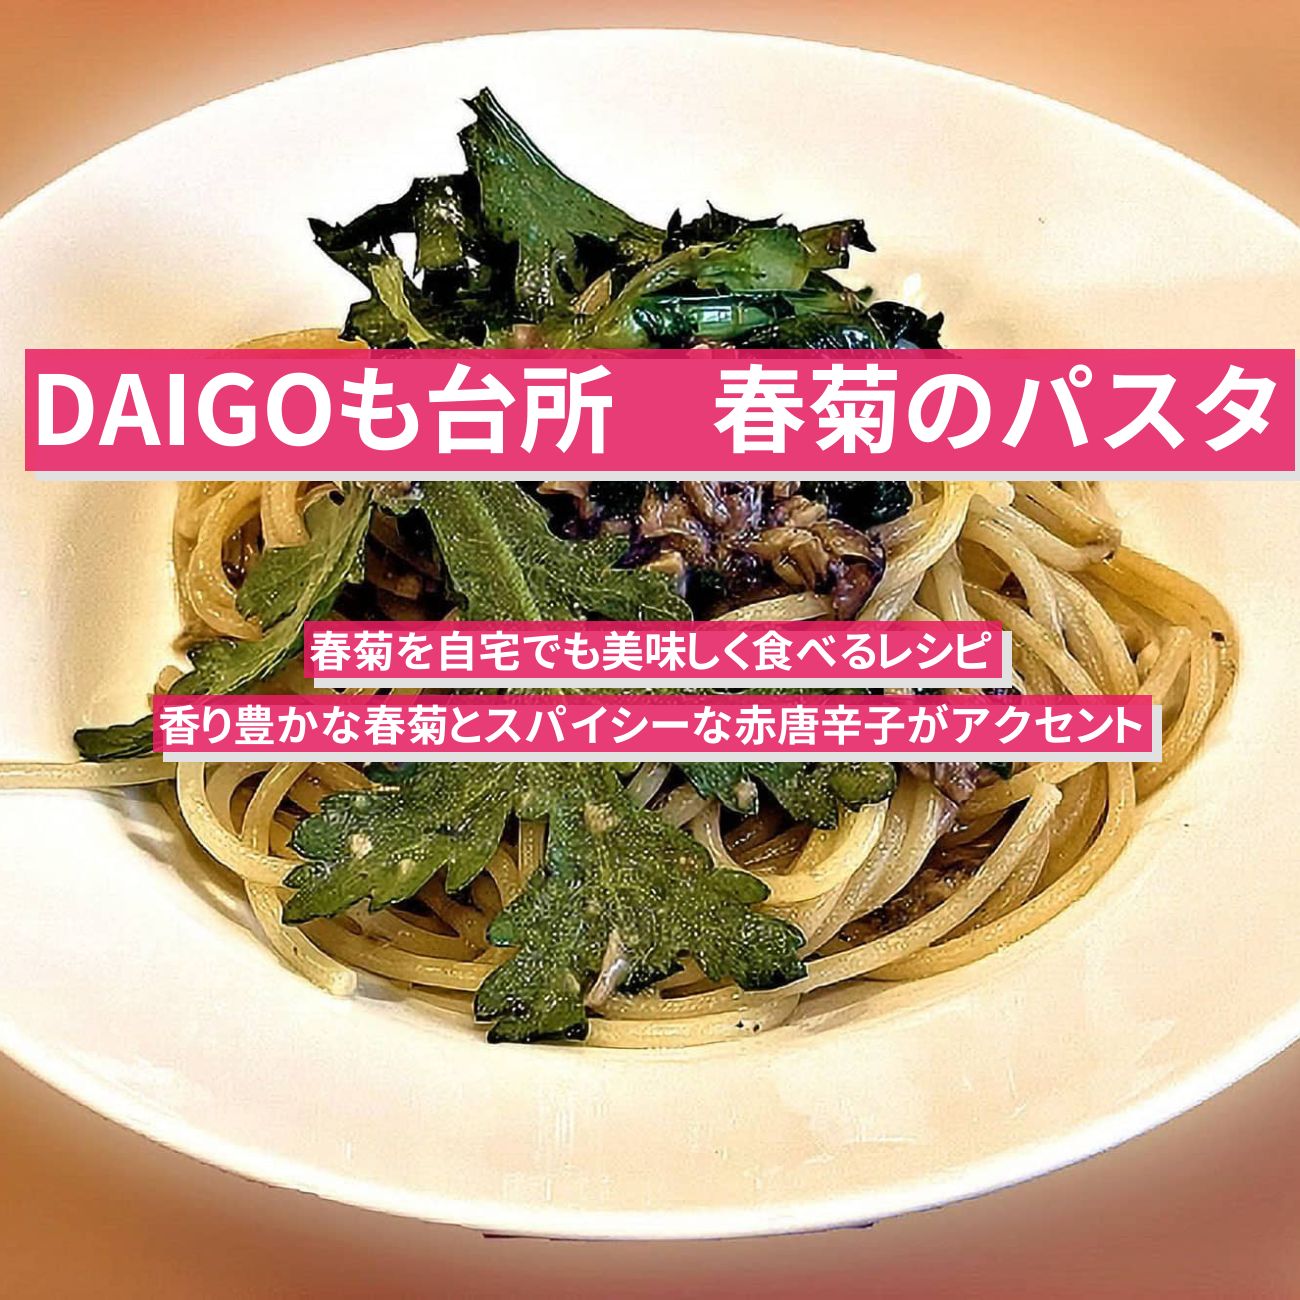 【DAIGOも台所】『春菊のパスタ』のレシピ・作り方を紹介